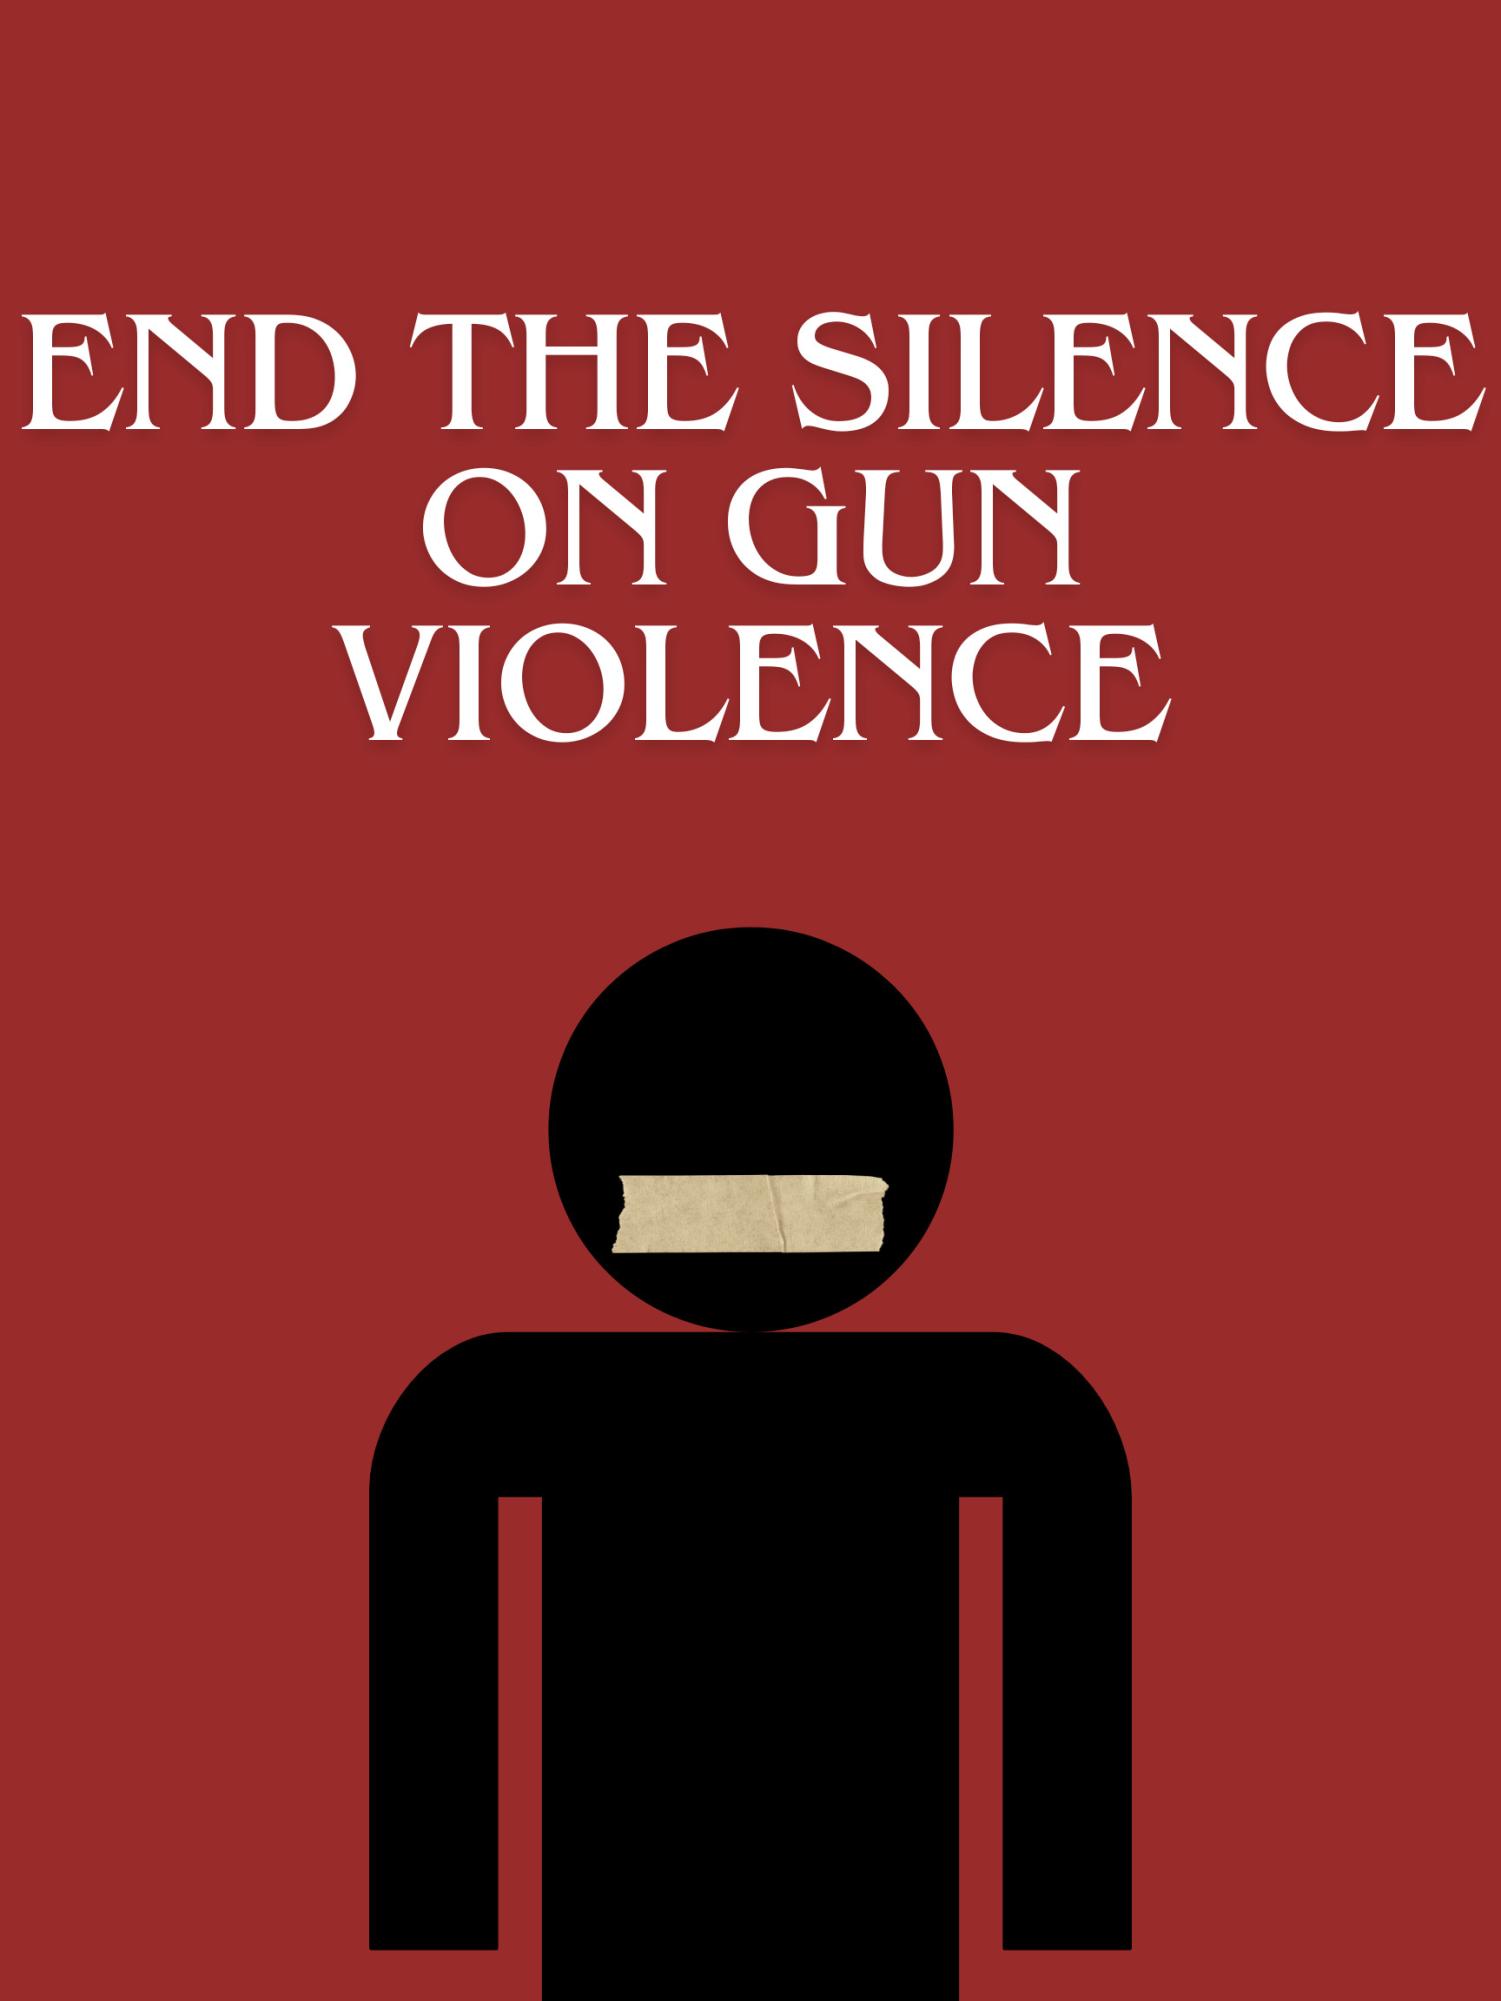 OPINION: End the Silence on Gun Violence